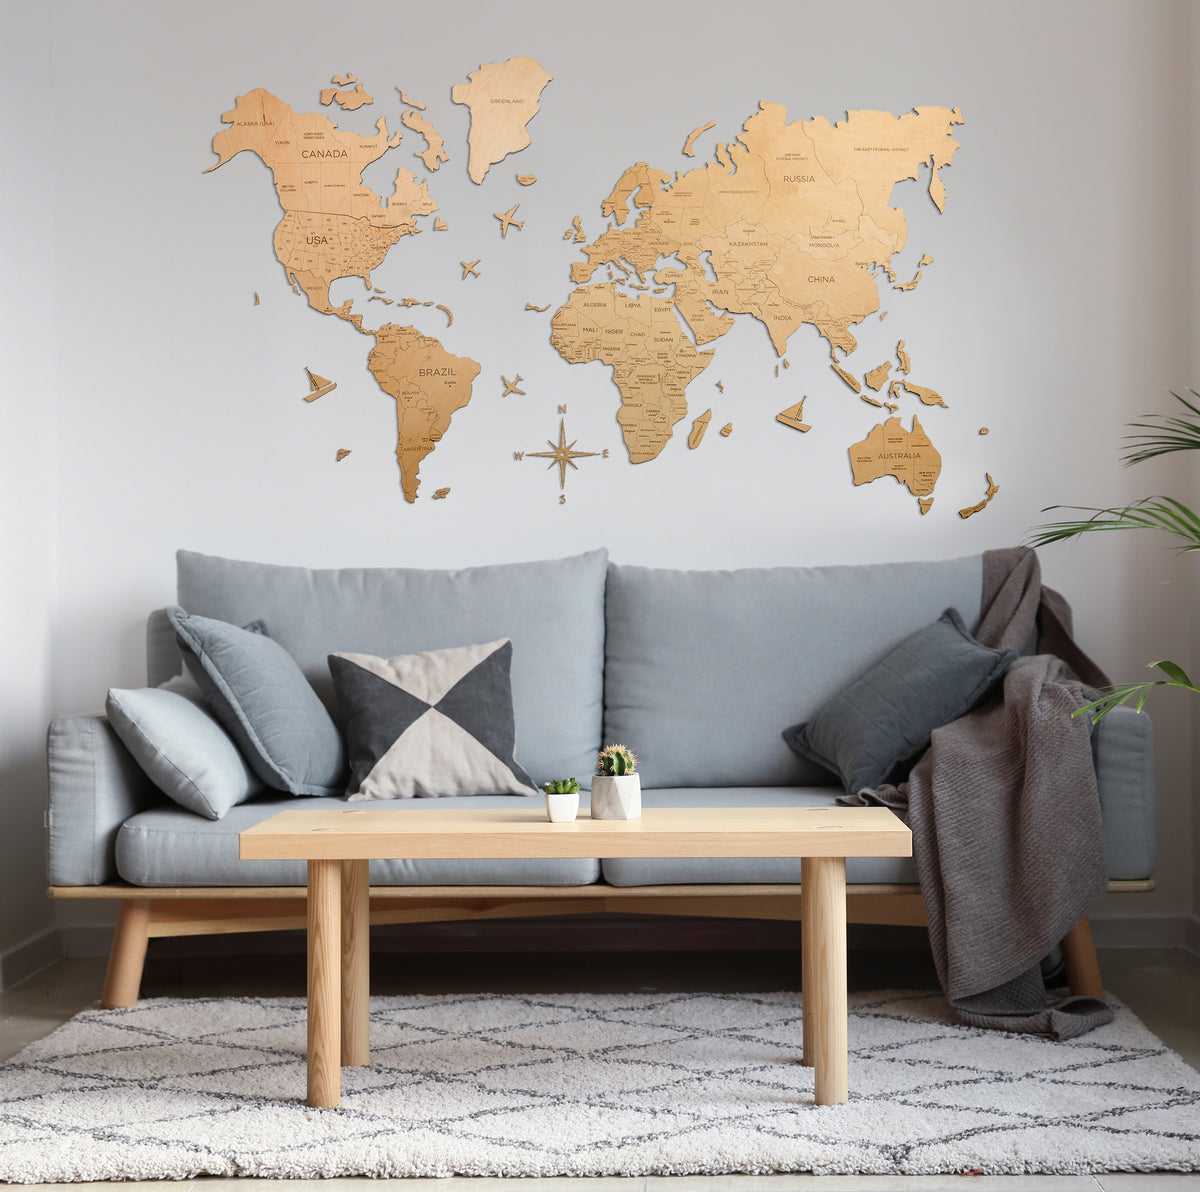 2D Wood World Map ライトブラウン 壁掛け木製世界地図【翌日発送】 – Enjoy The Wood 日本公式サイト  (壁掛け木製世界地図 通販)